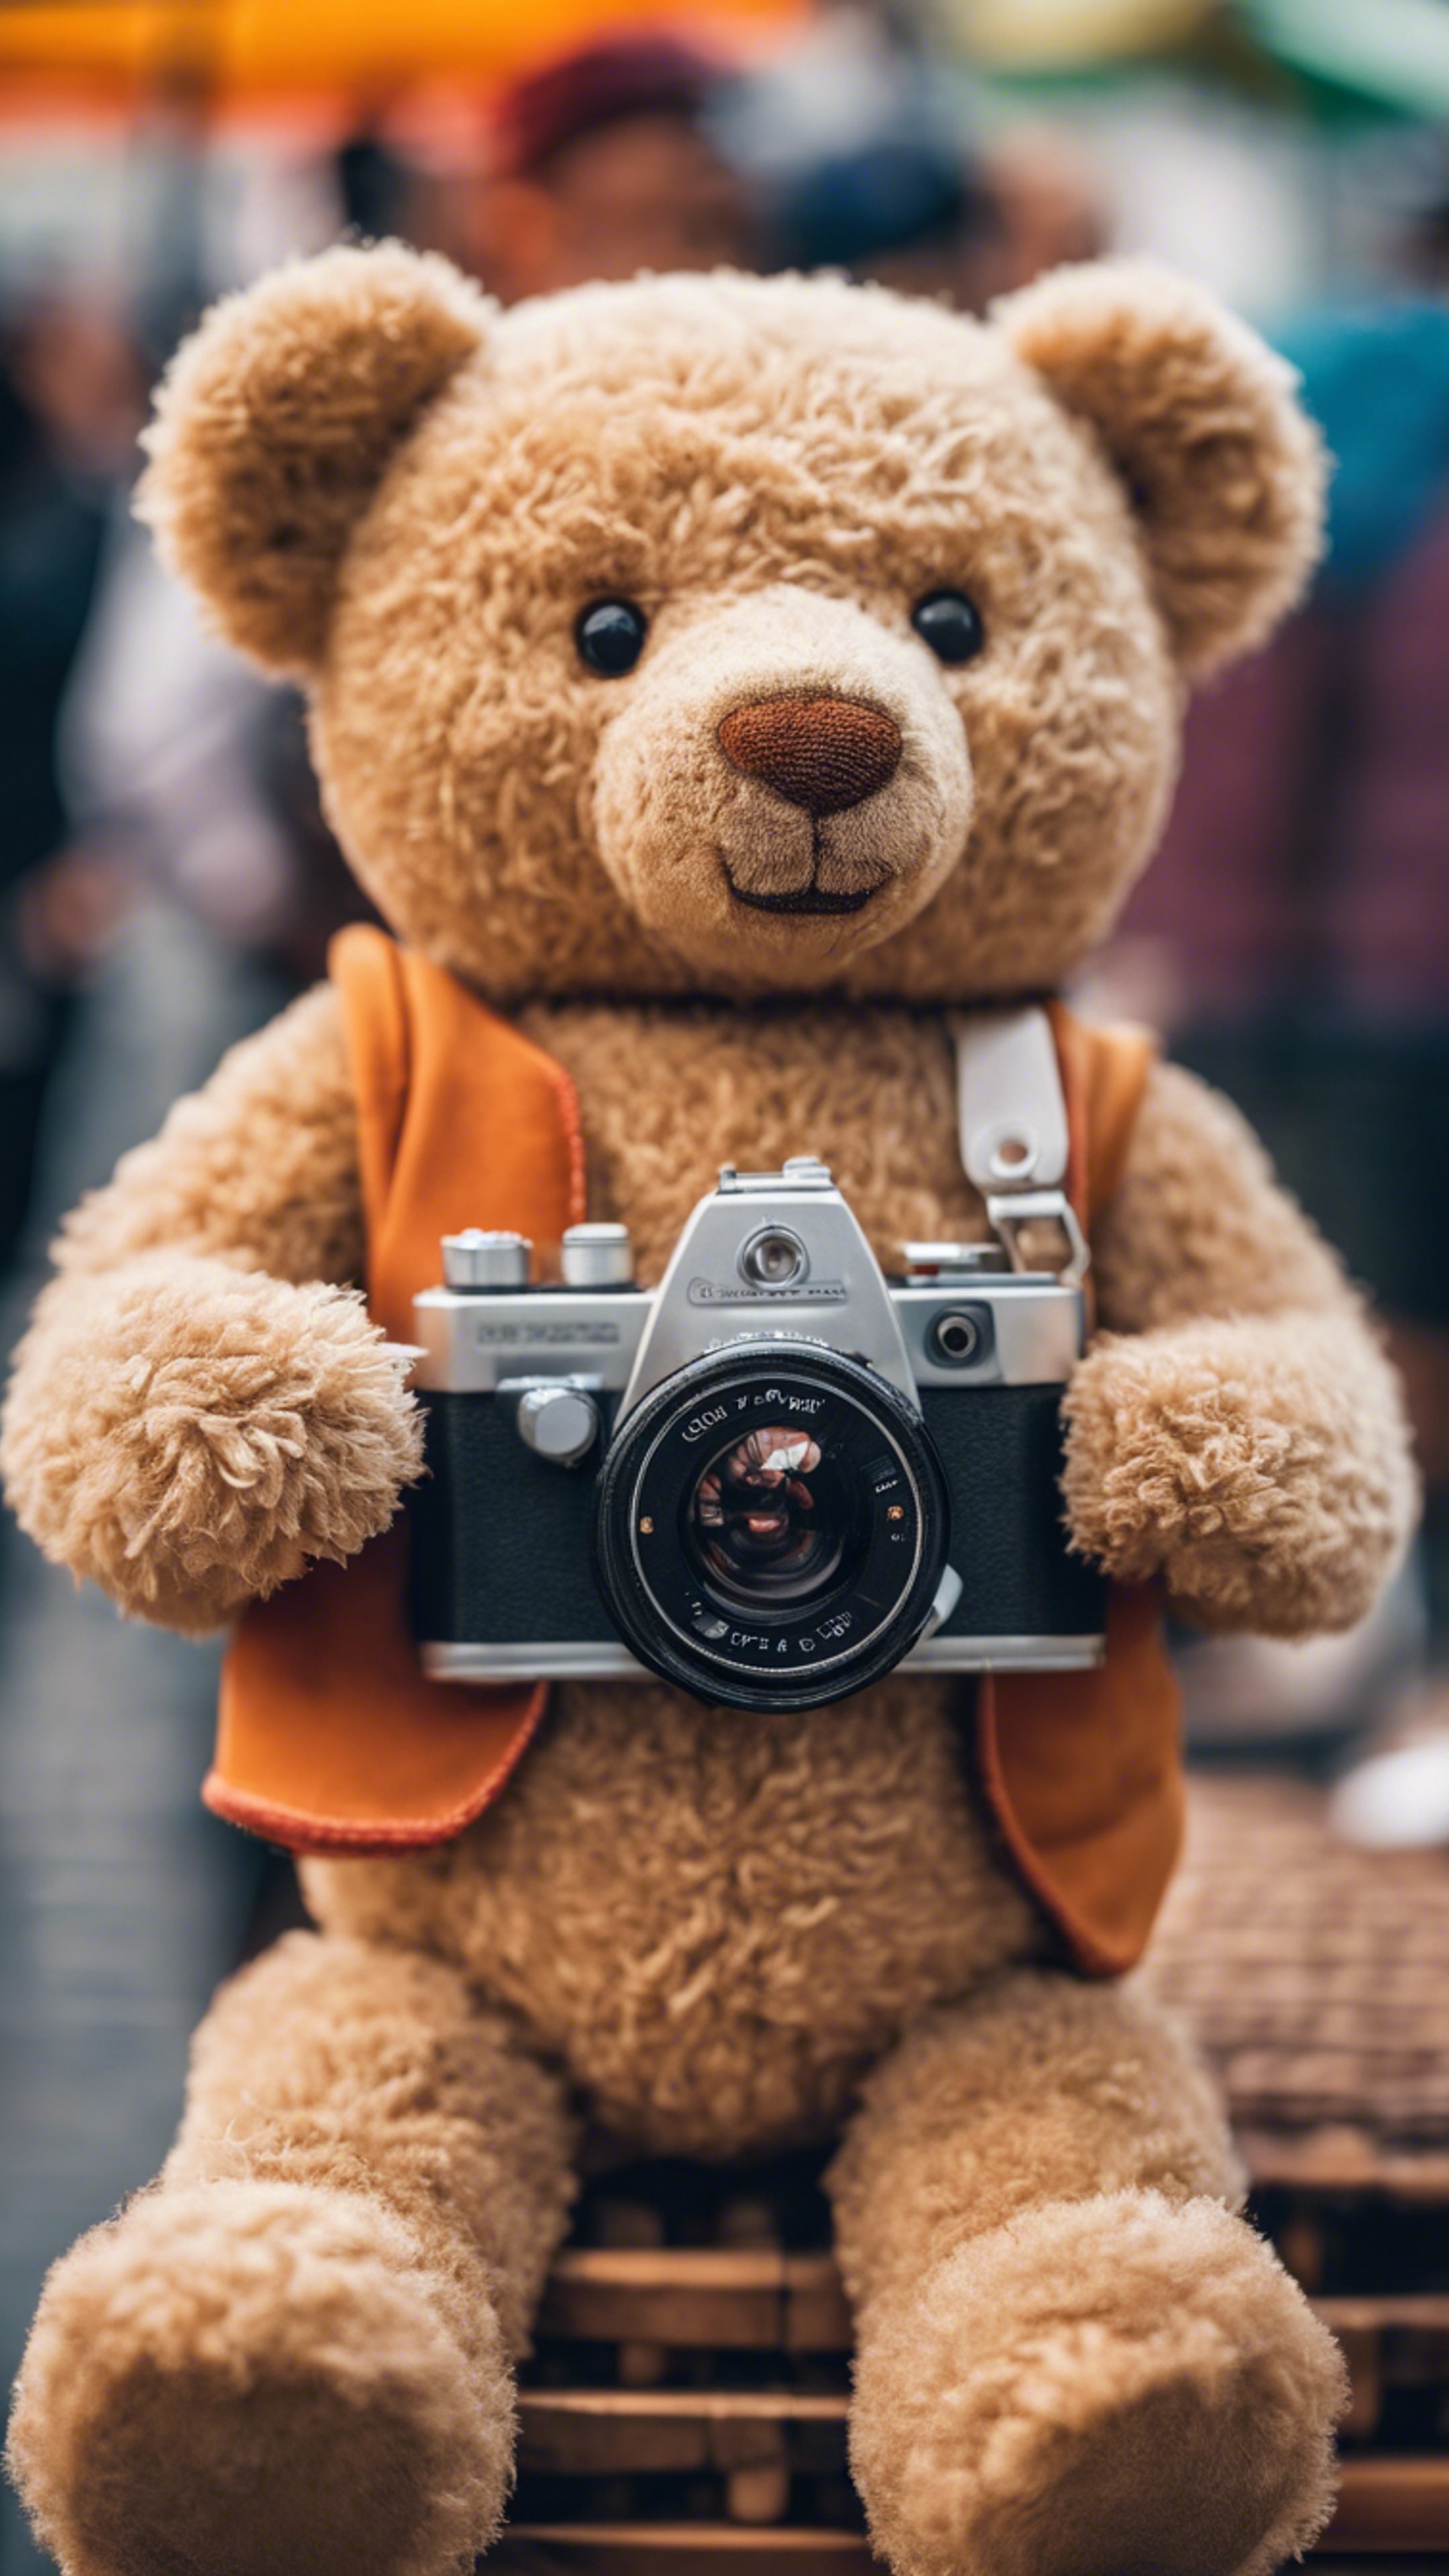 A teddy bear photography hobbyist, holding a toy camera, stood amidst a vibrant street fair.壁紙[6bbb7c06ef4c4008bbb6]